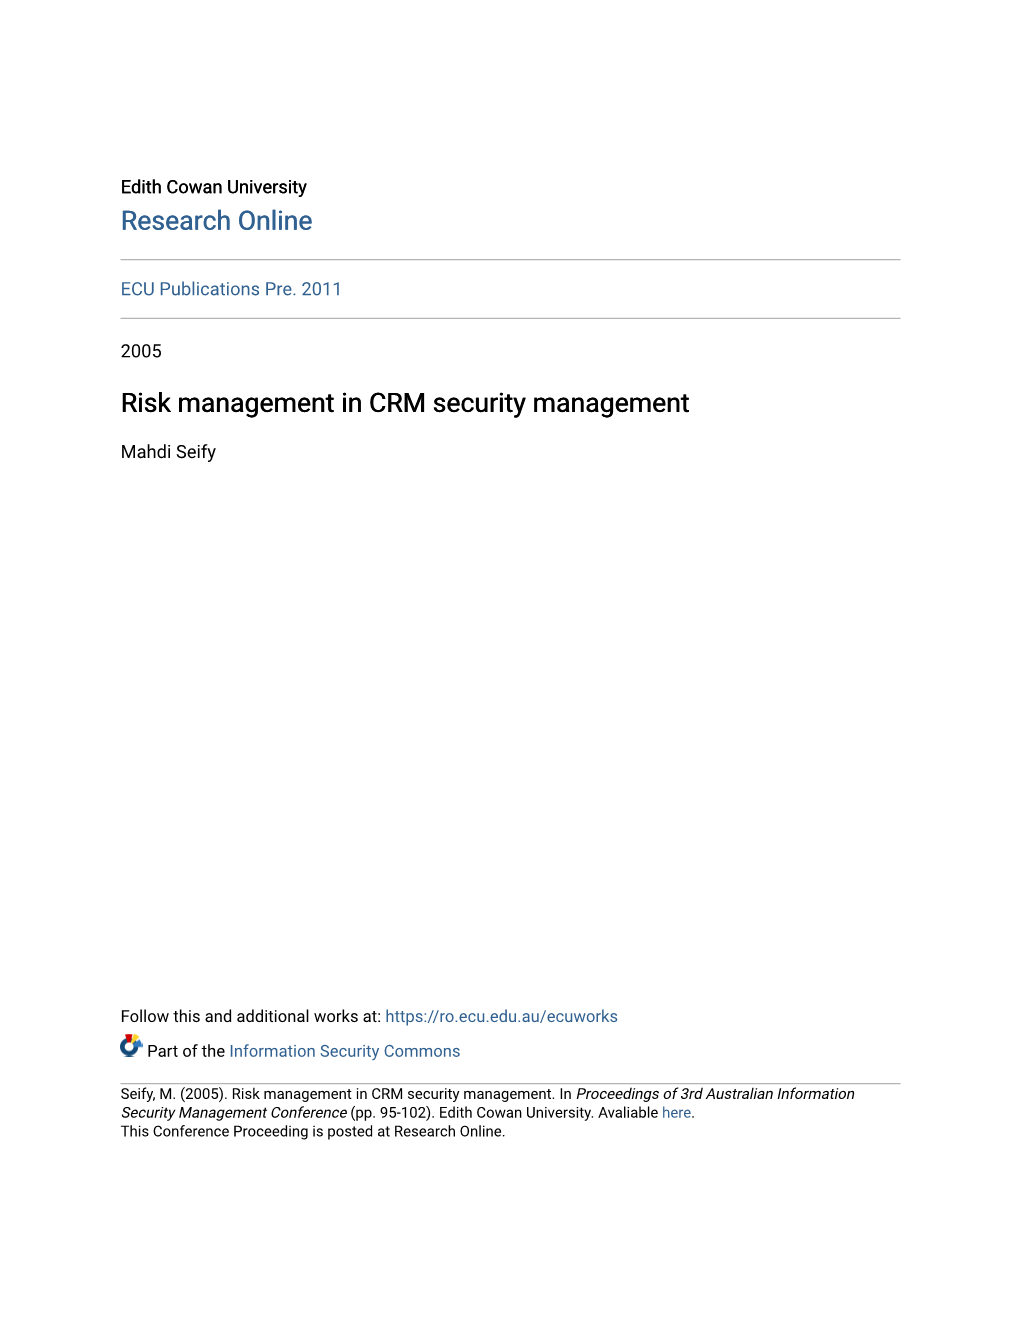 Risk Management in CRM Security Management